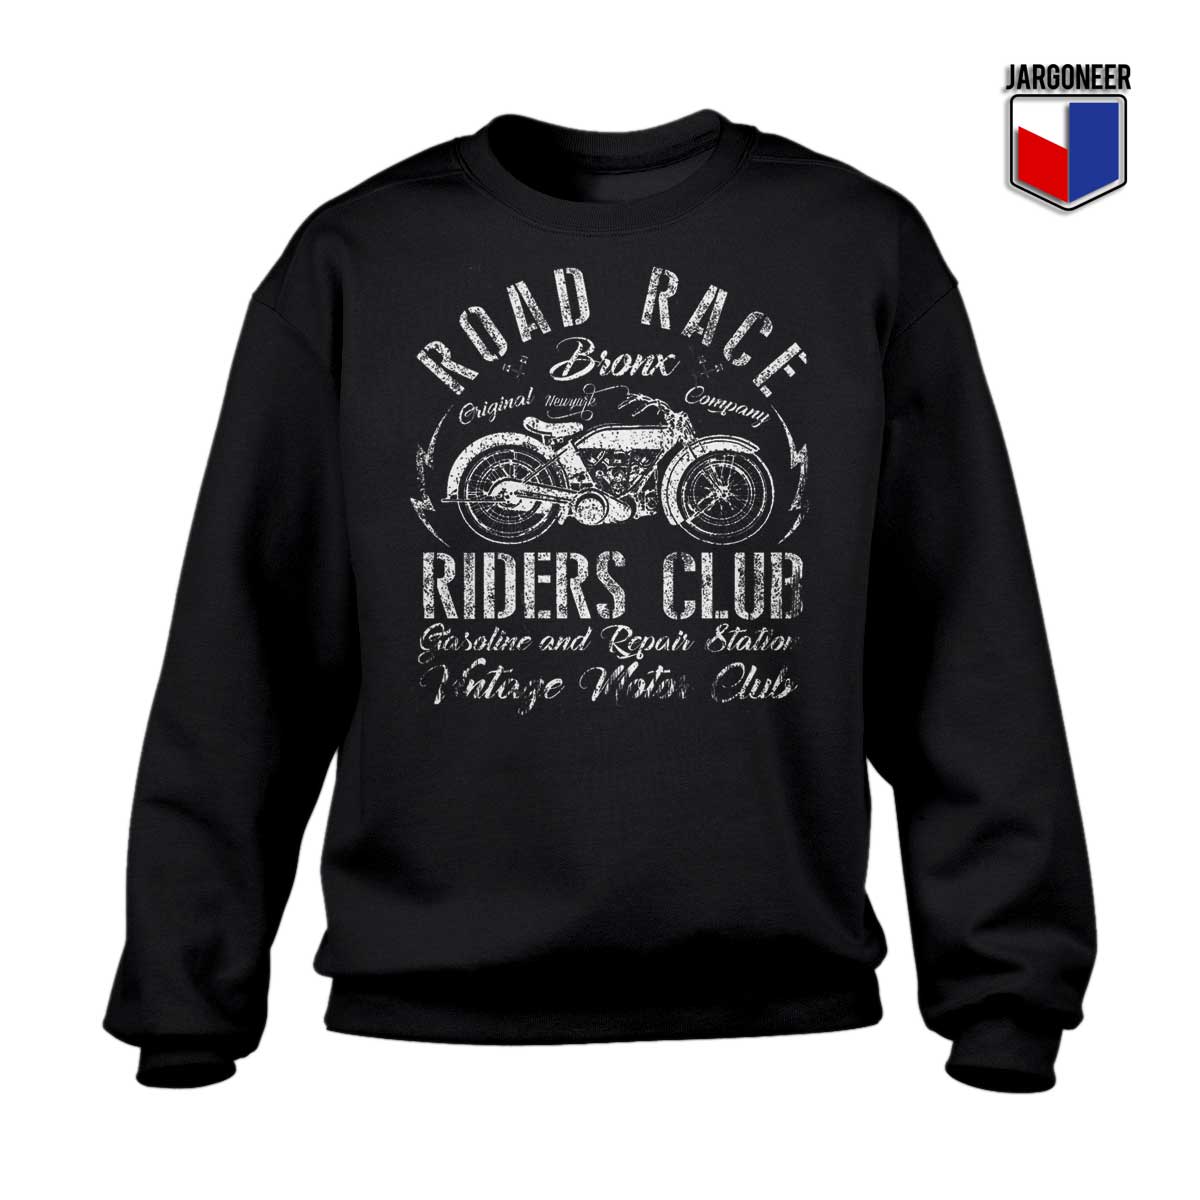 Road Race Bronx Rider Club Sweatshirt - Shop Unique Graphic Cool Shirt Designs